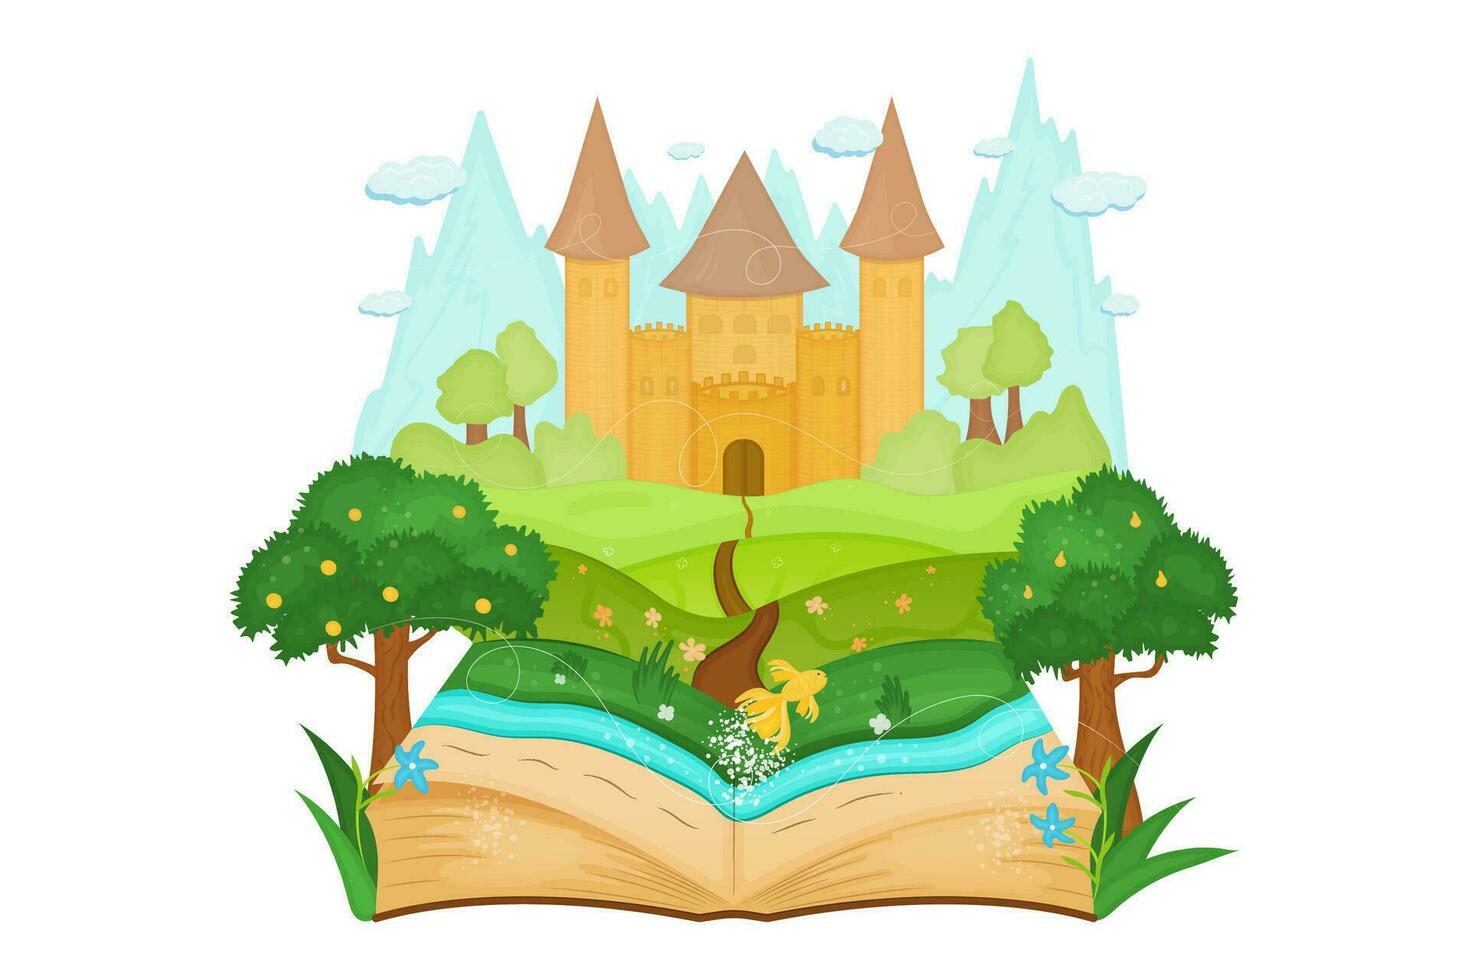 öffnen Buch mit Landschaft Märchen Schloss Felder, Bäume, Fluss, klein Gold Fisch. Vektor Illustration